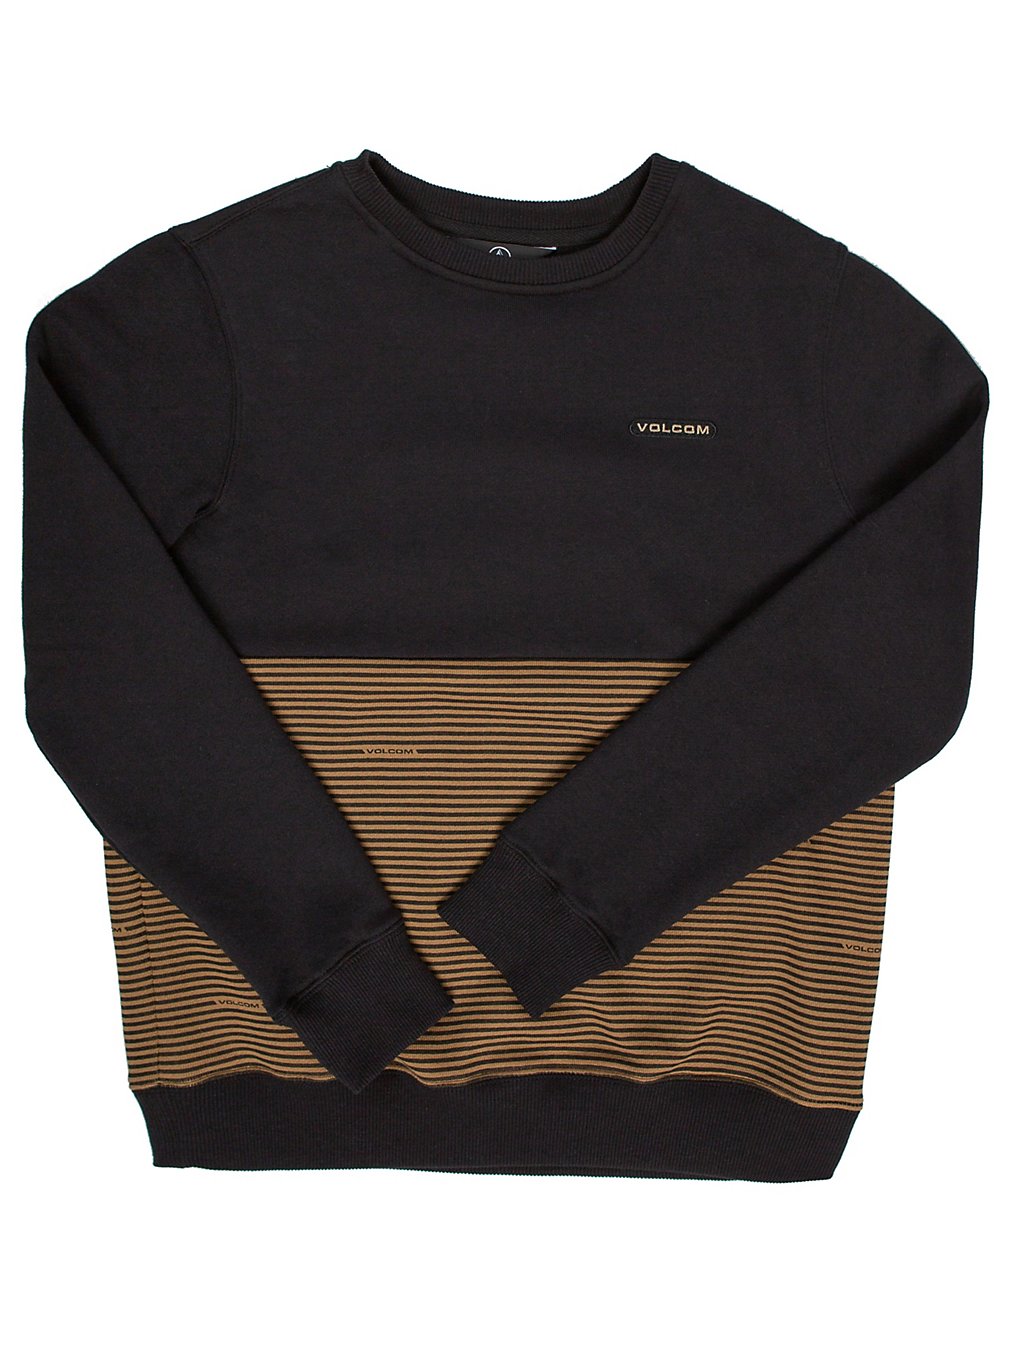 Volcom Forzee Crew Sweater black combo